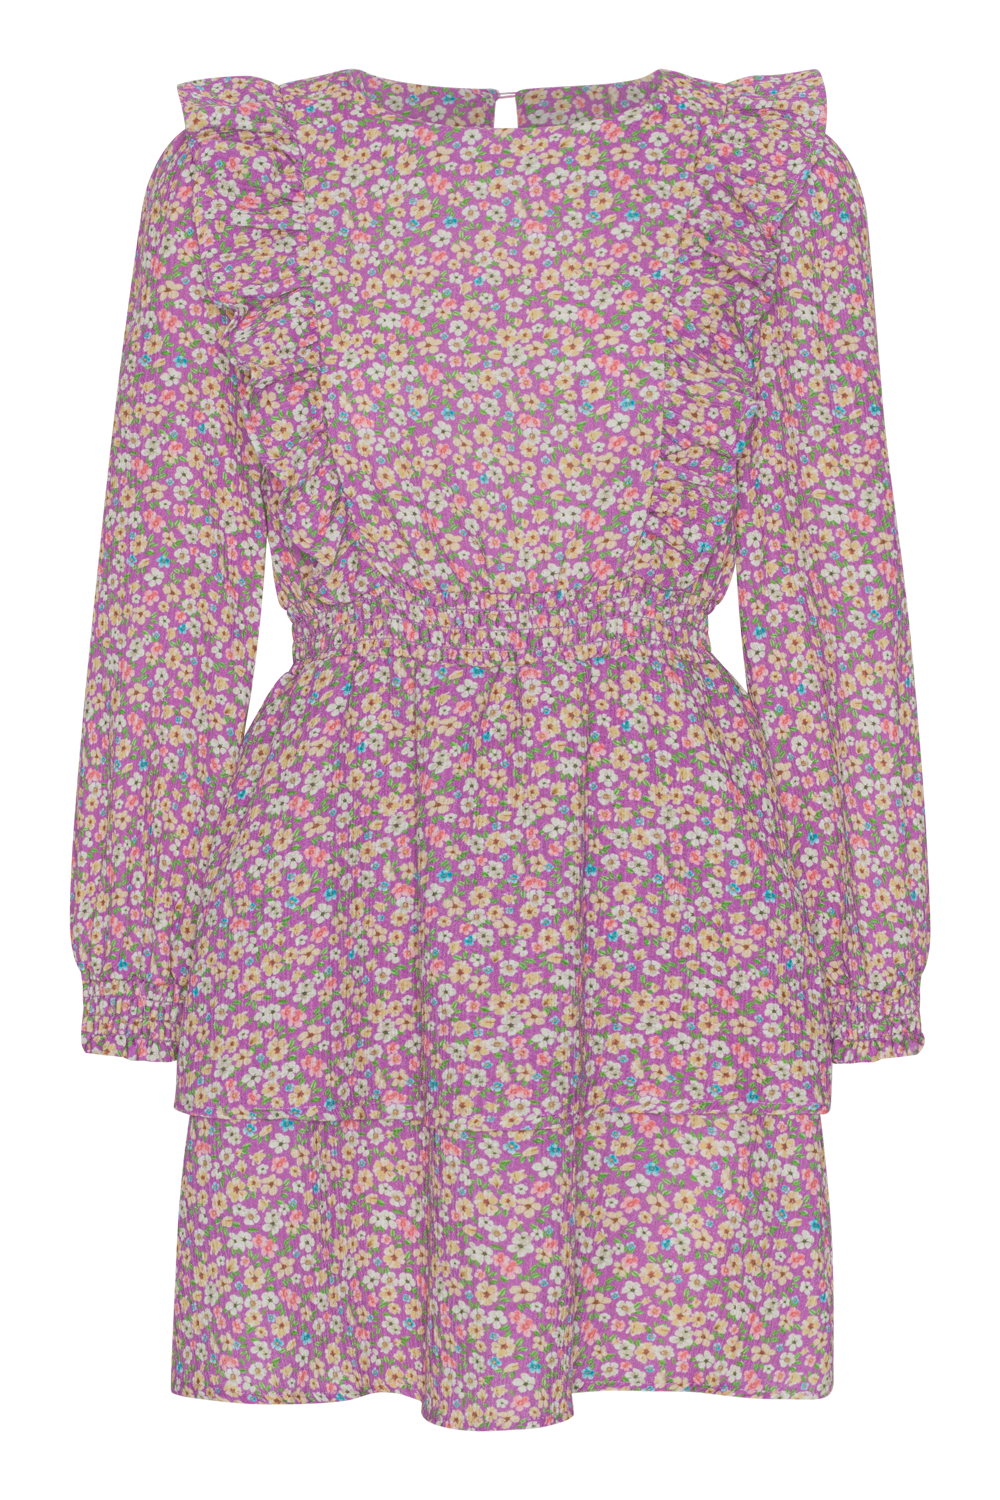 Patricia Long Sleeve Short Dress Light Pink Multi Small Flower